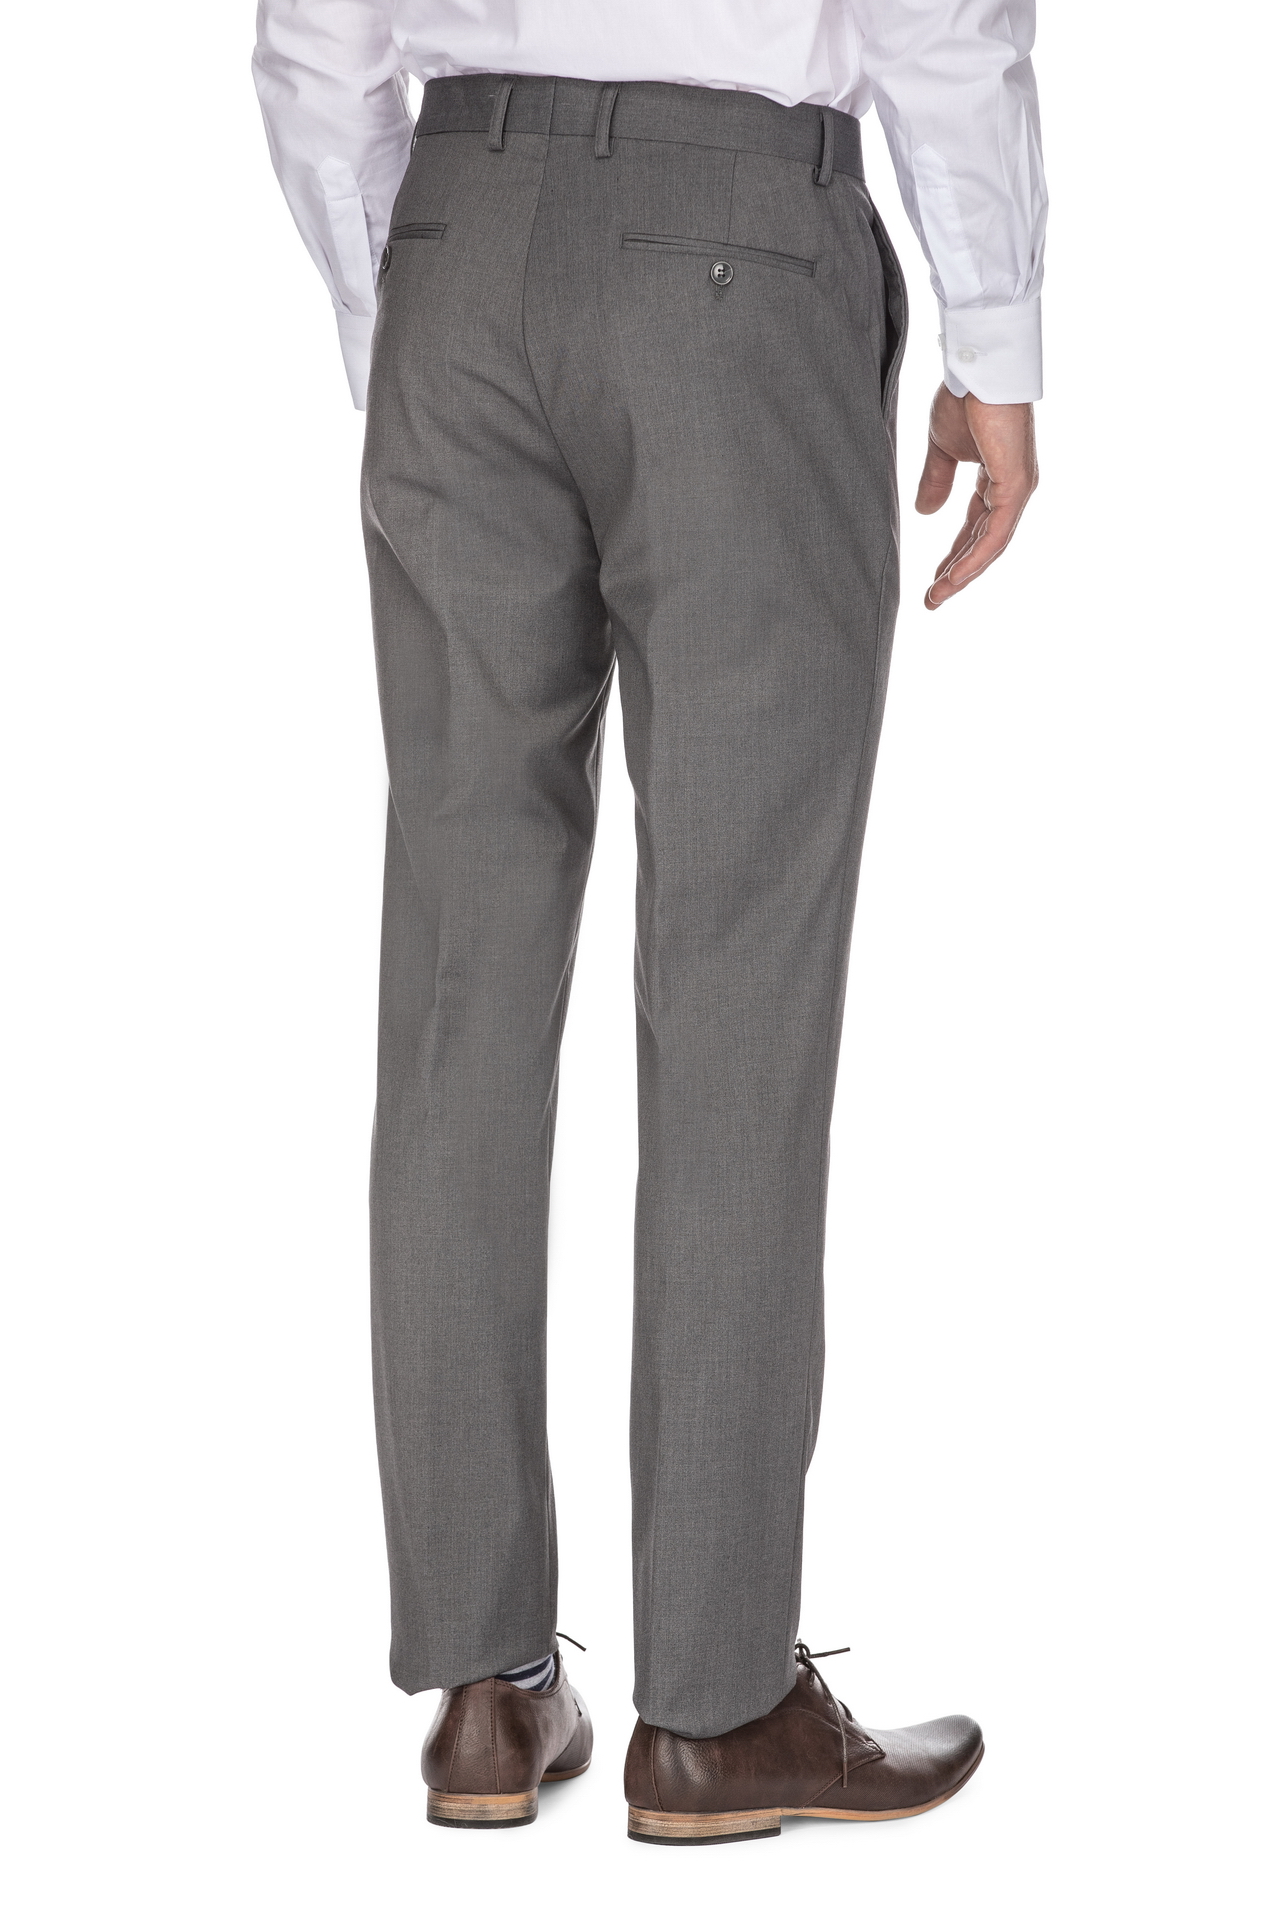 Buy Men Navy Check Slim Fit Formal Trousers Online - 778355 | Peter England